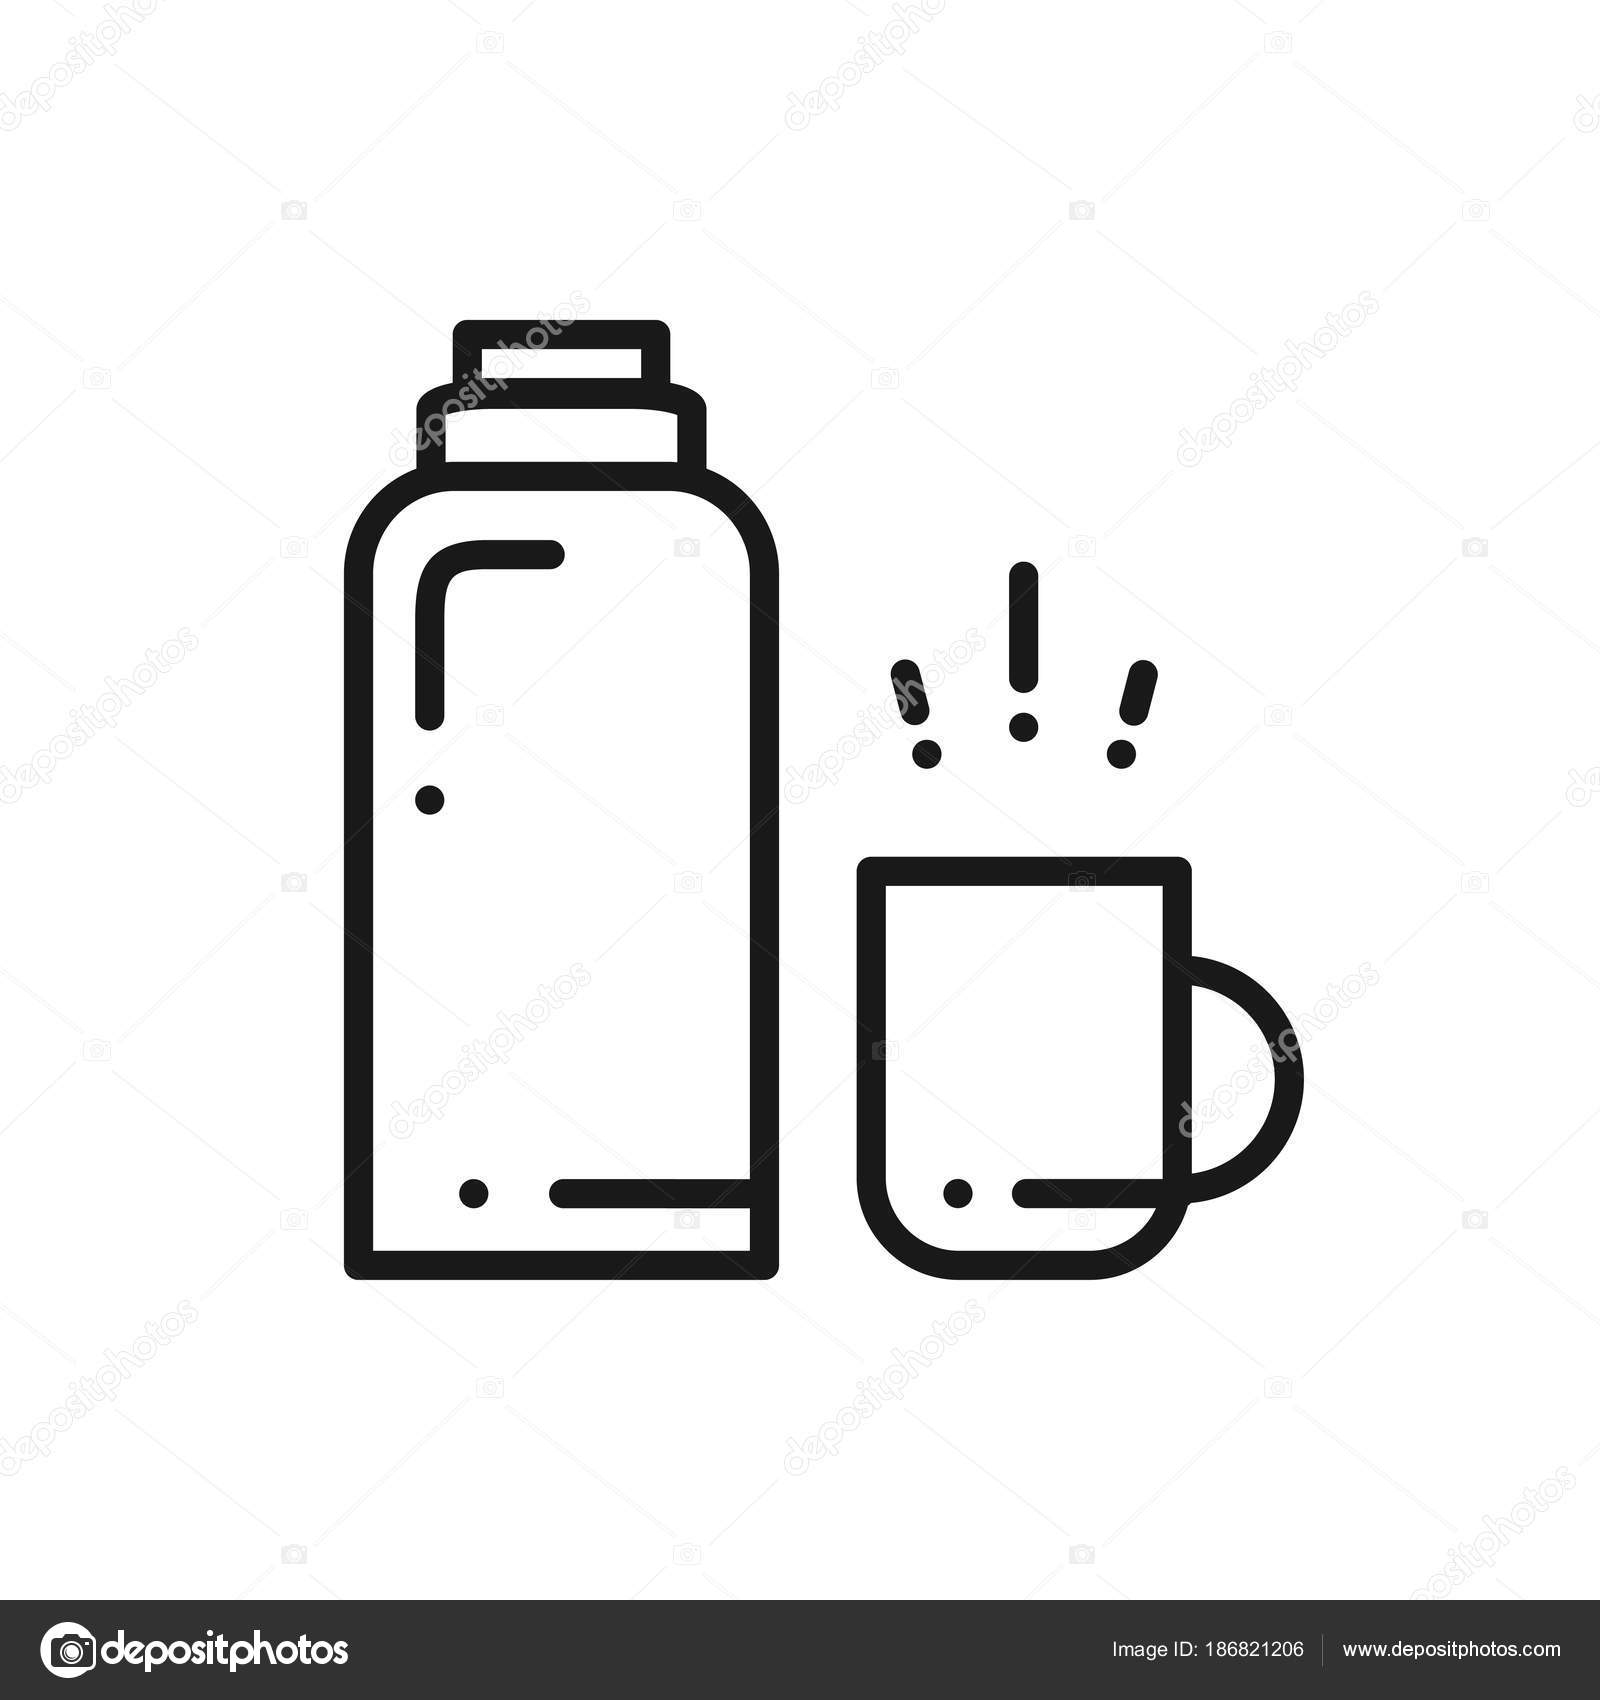 https://st3.depositphotos.com/2650255/18682/v/1600/depositphotos_186821206-stock-illustration-thermos-bottle-line-icon-vacuum.jpg